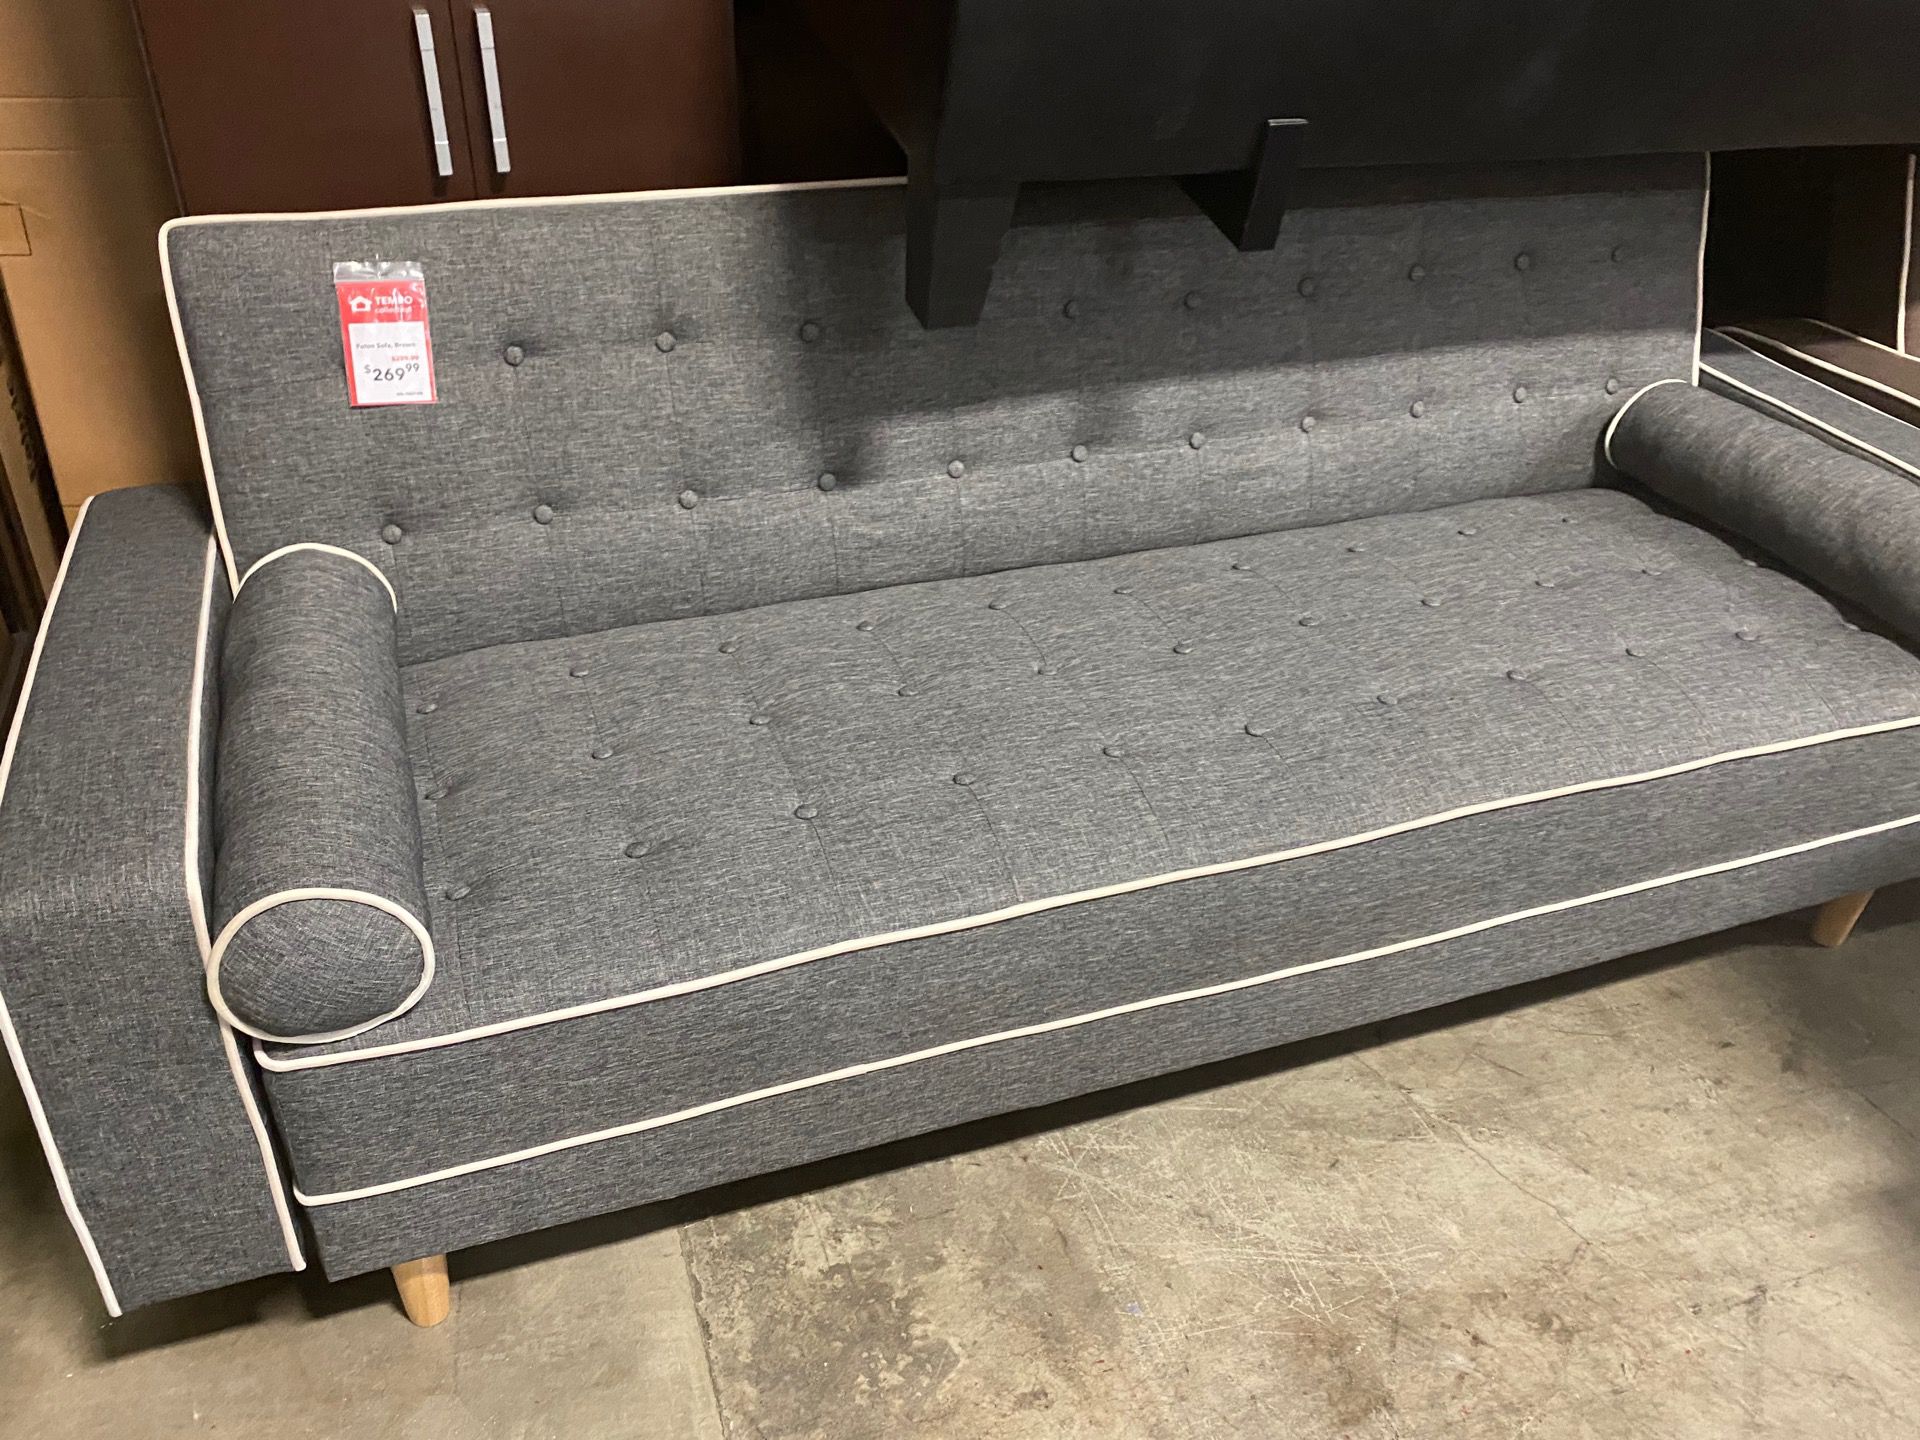 SPL Sofa Bed / Futon with Pillows, Gray